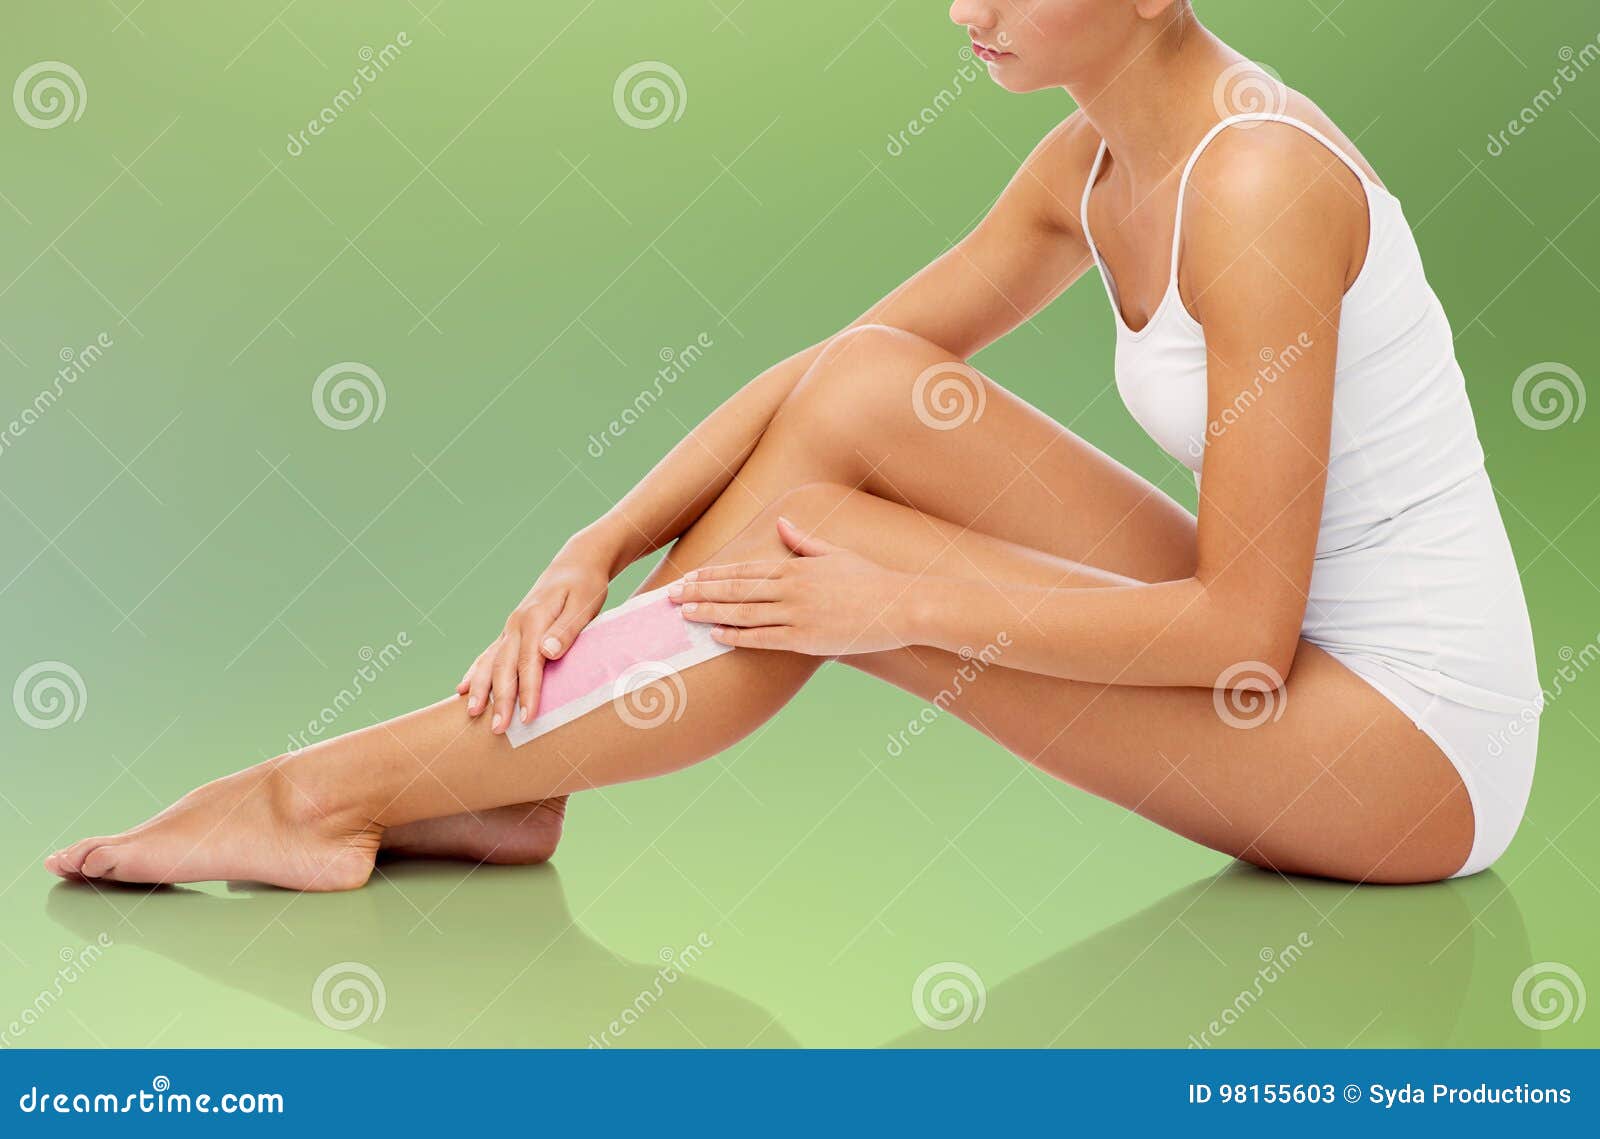 woman removing leg hair with depilatory wax strip